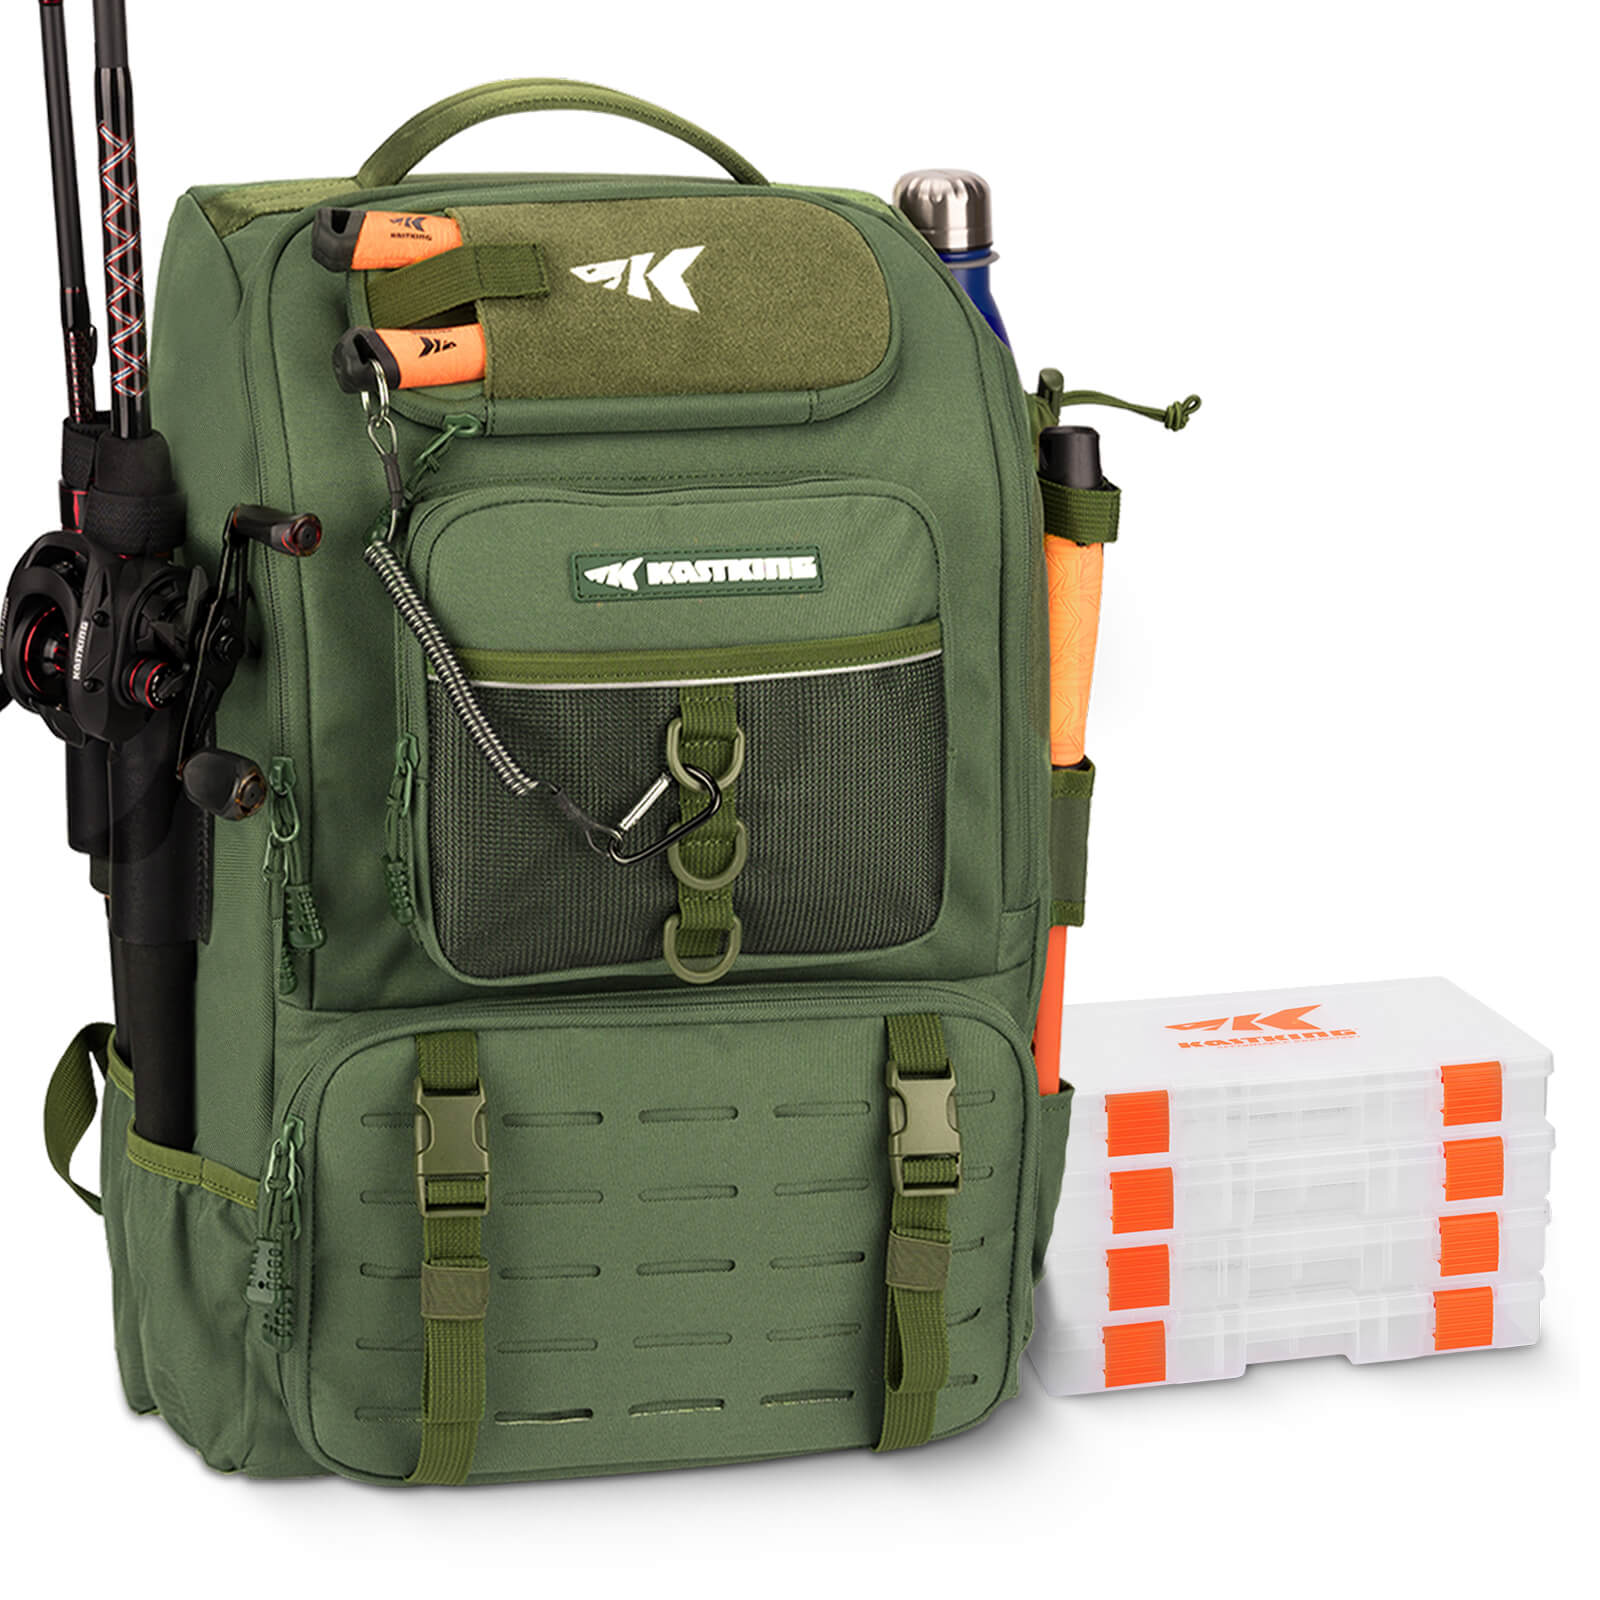 Fishing Backpack Fishing Tackle Bag With Rod Holder Tackle Box Bag